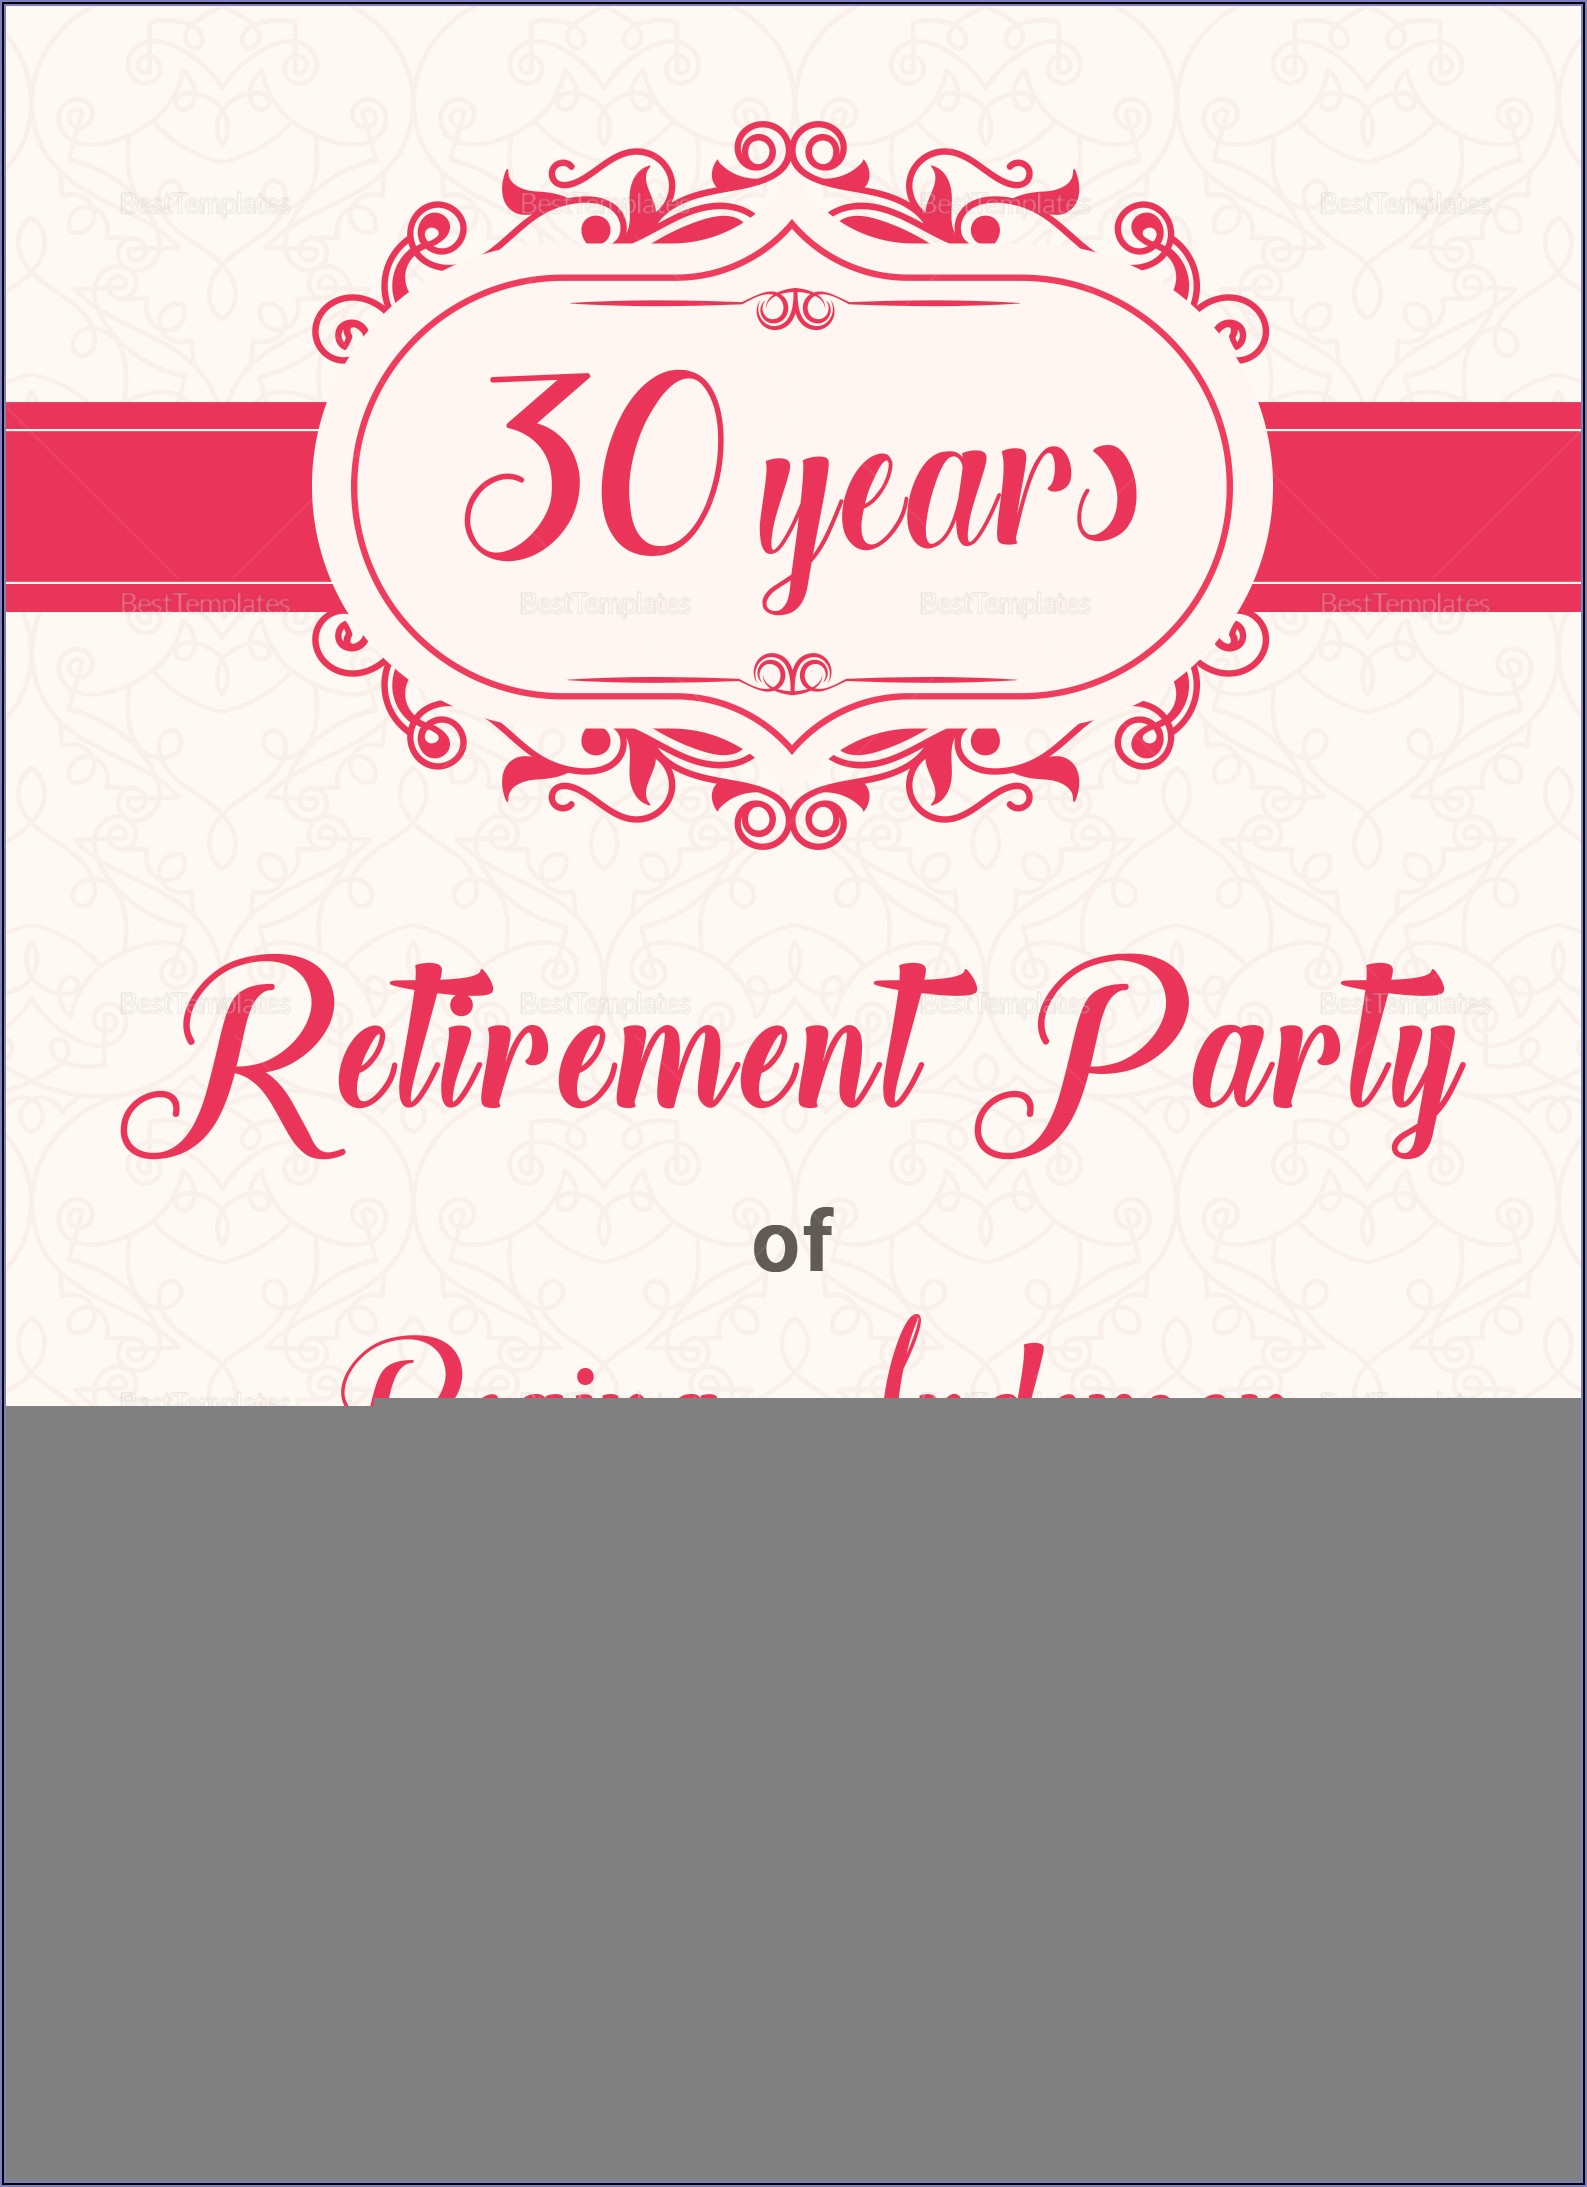 Sample Retirement Party Invitation Template